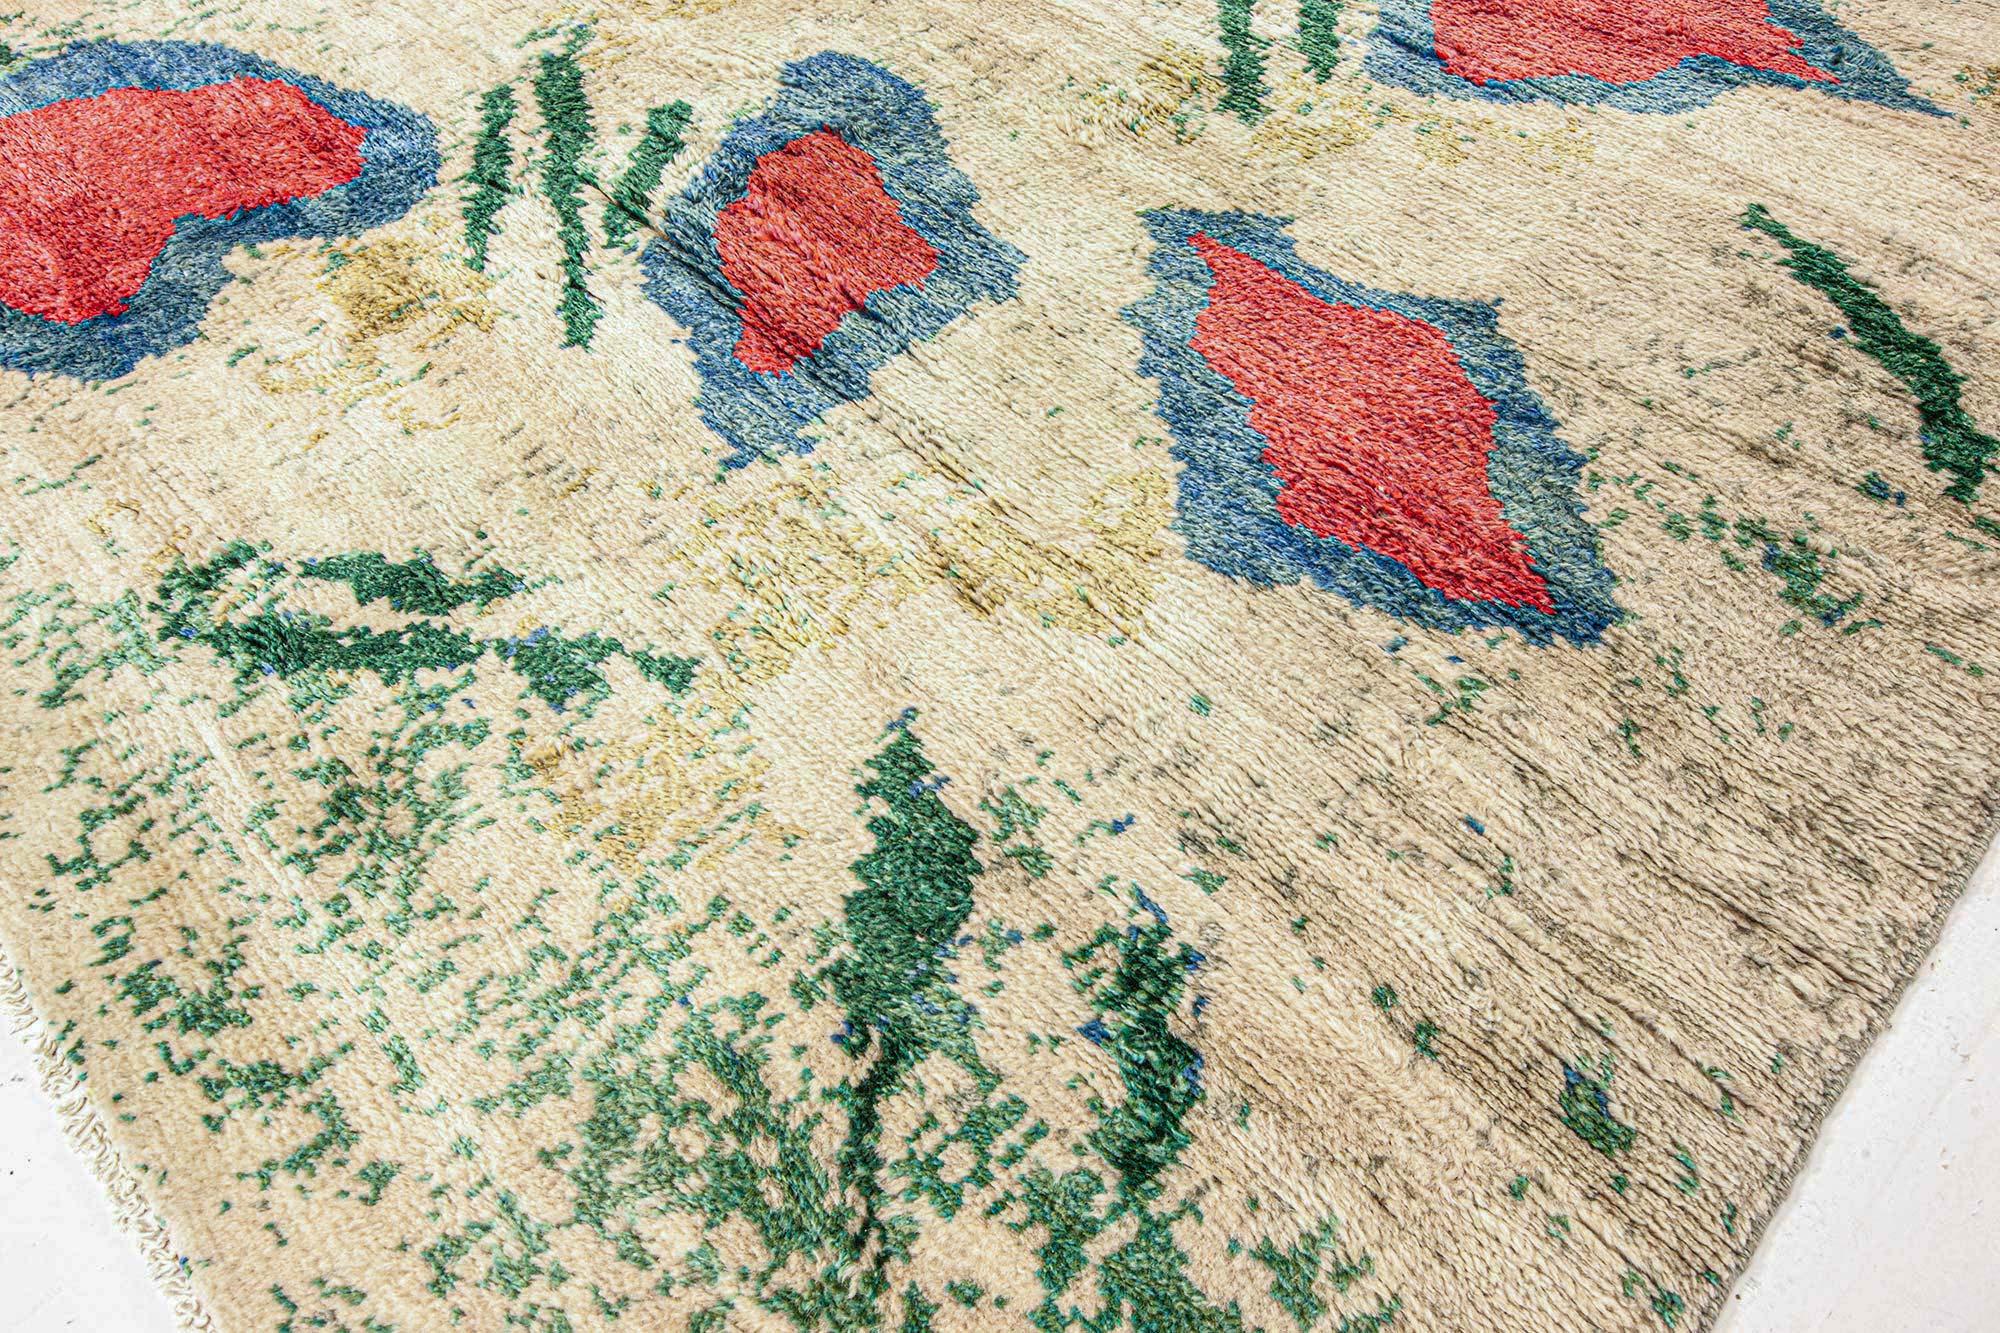 Hand-made jolly rug by Doris Leslie Blau.
Size: 10'2